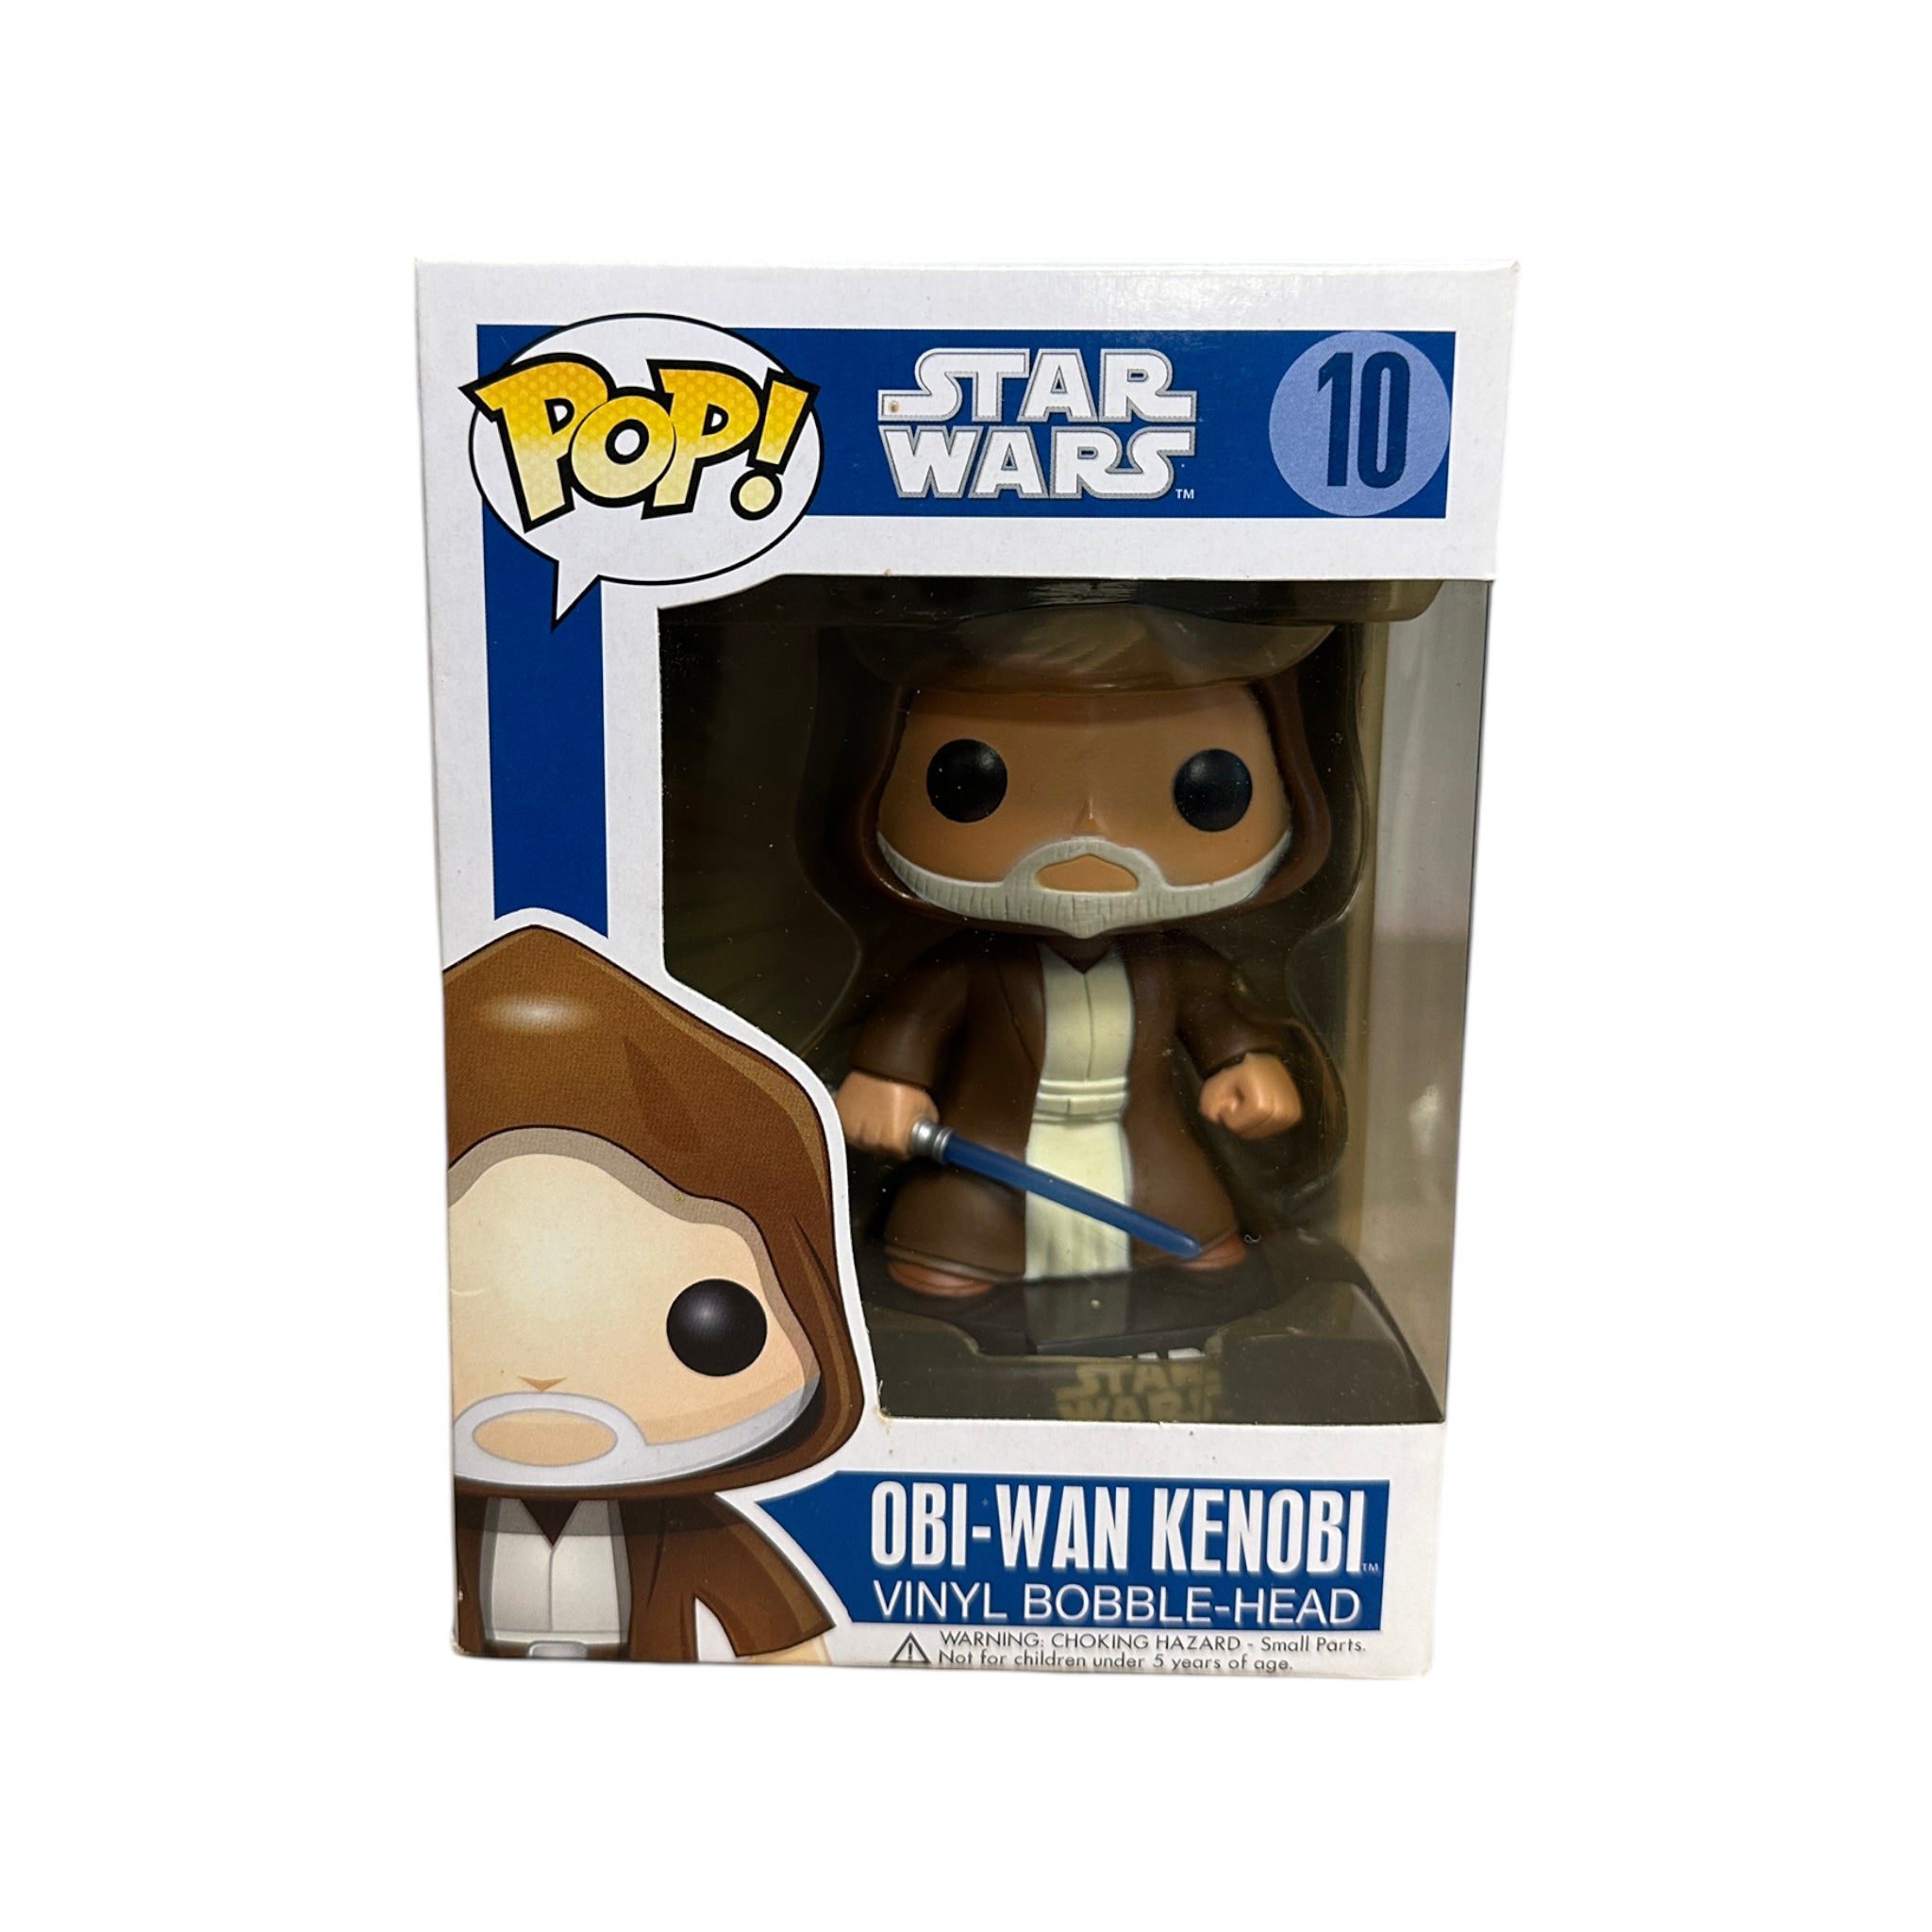 Obi-Wan Kenobi #10 (Large Writing) Funko Pop! - Star Wars - 2011 Pop! - Condition 6/10